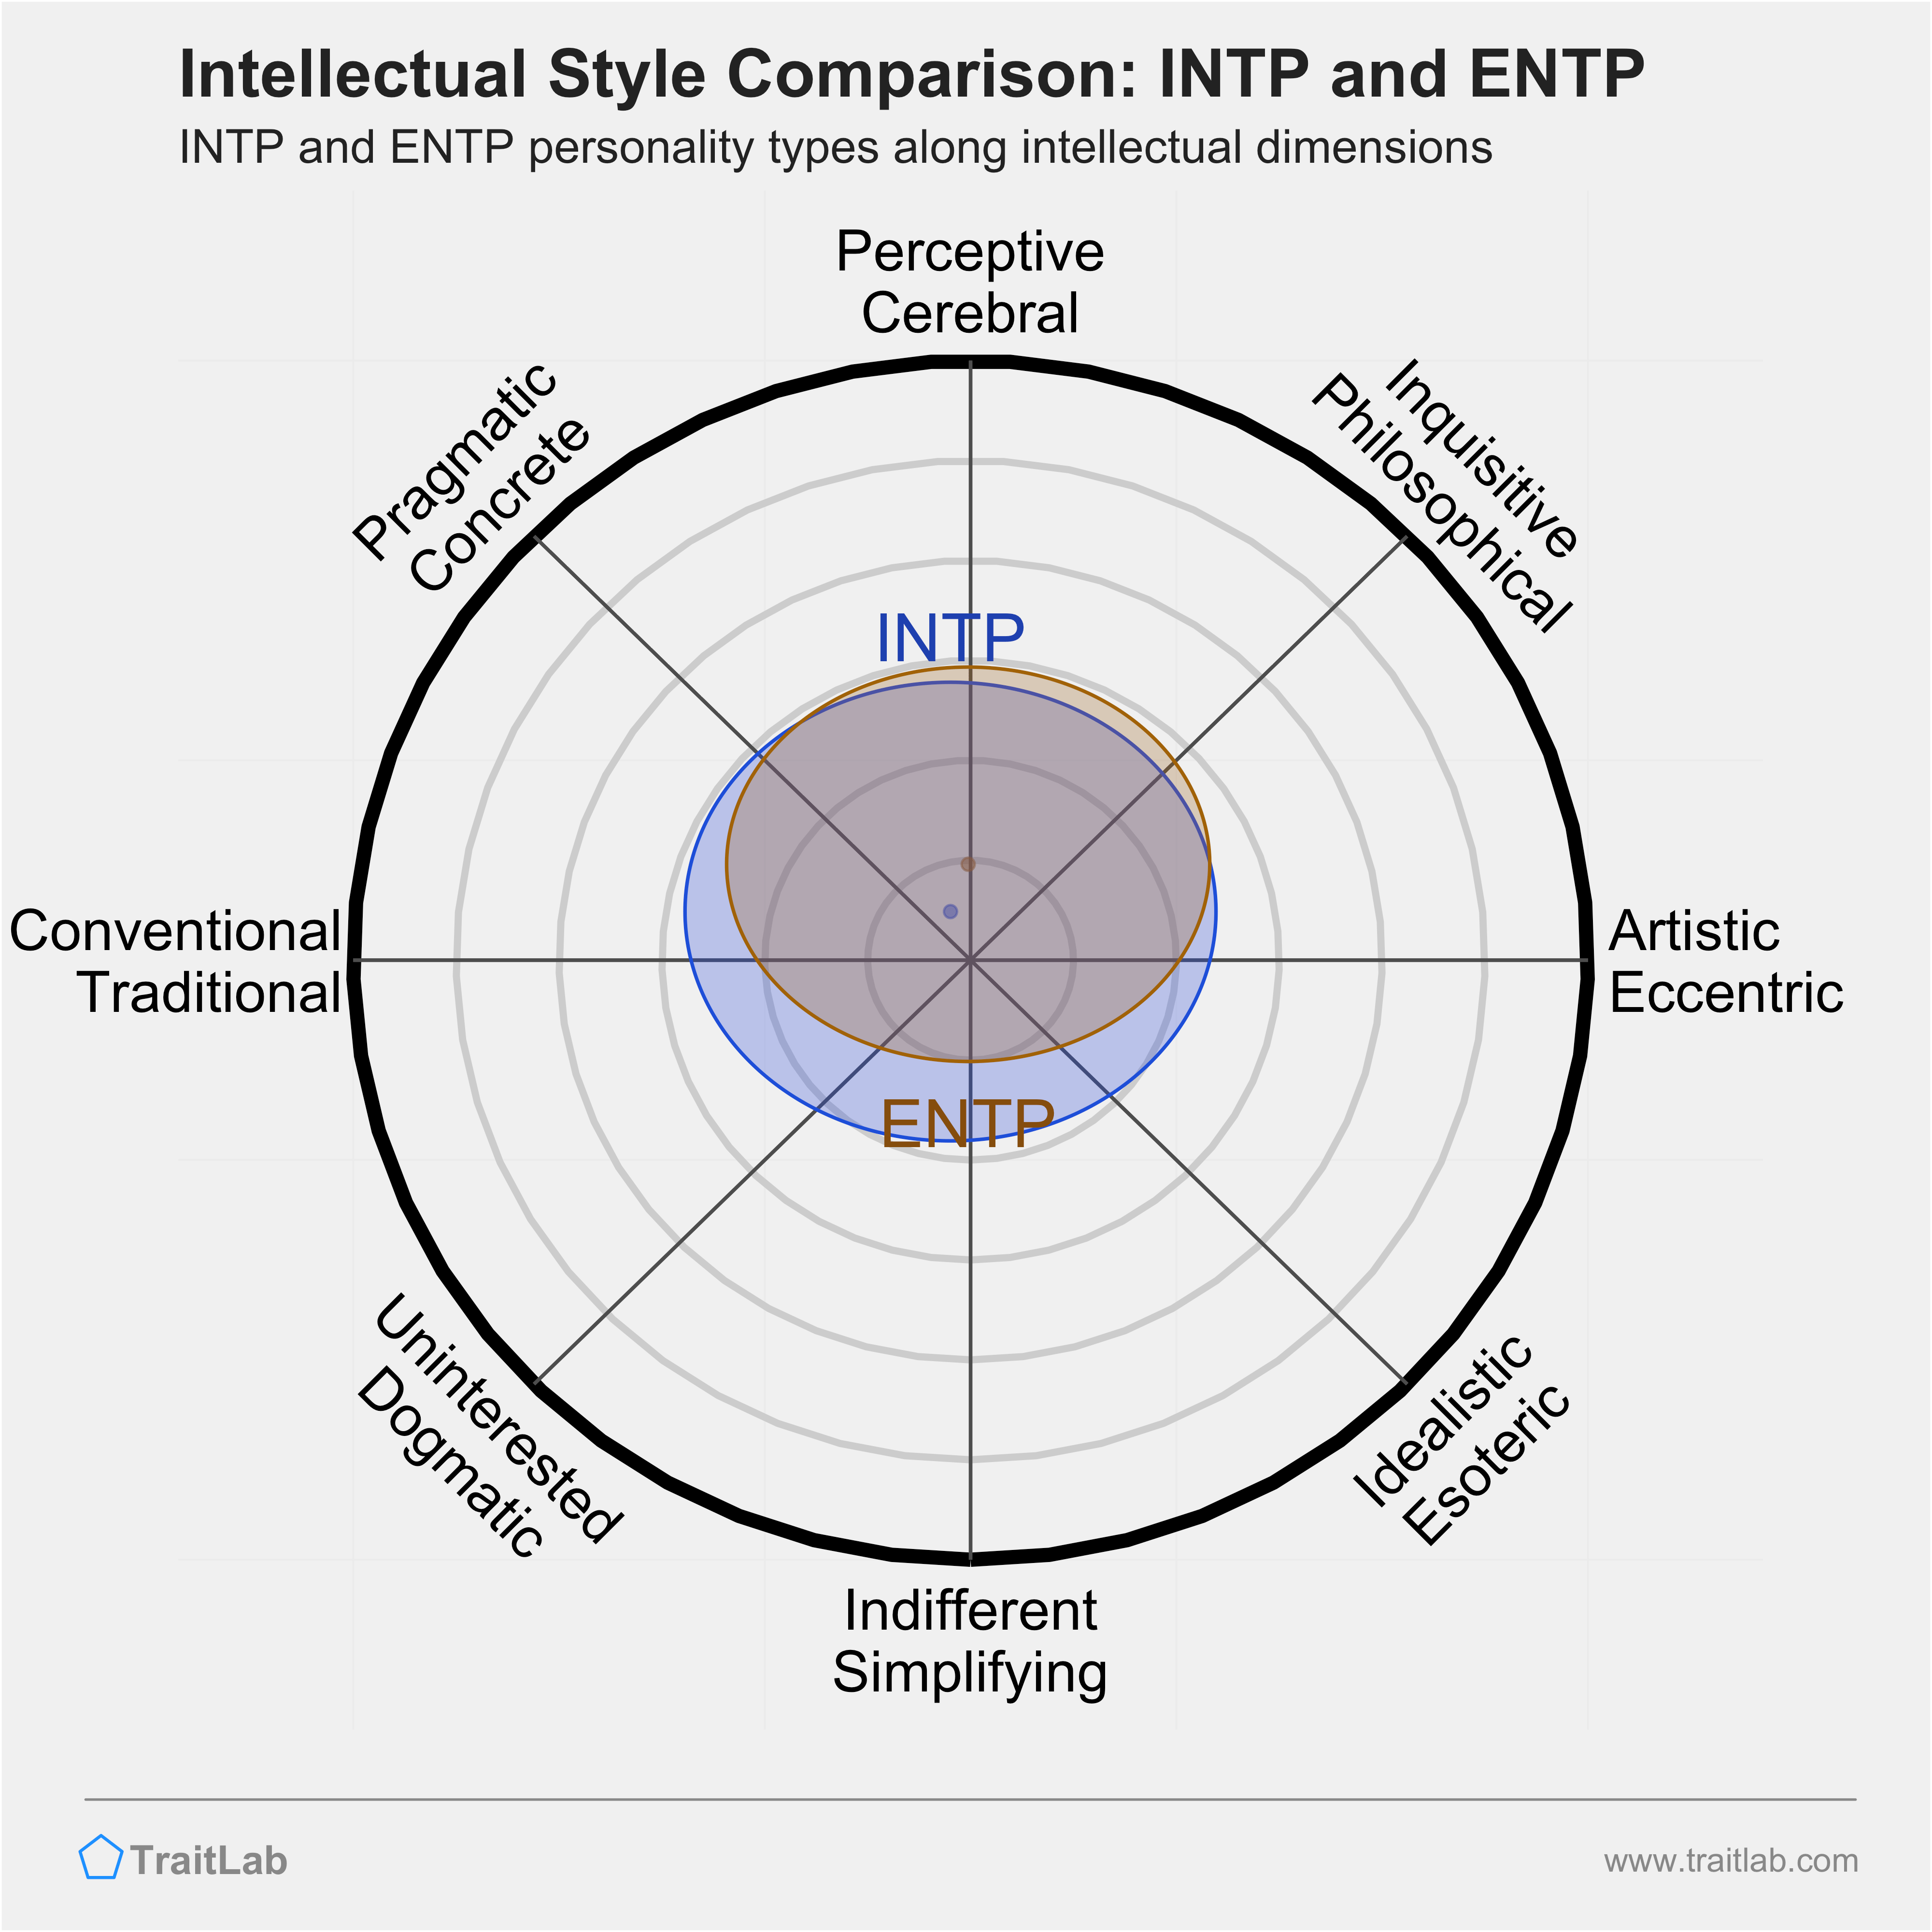 INTP and ENTP comparison across intellectual dimensions